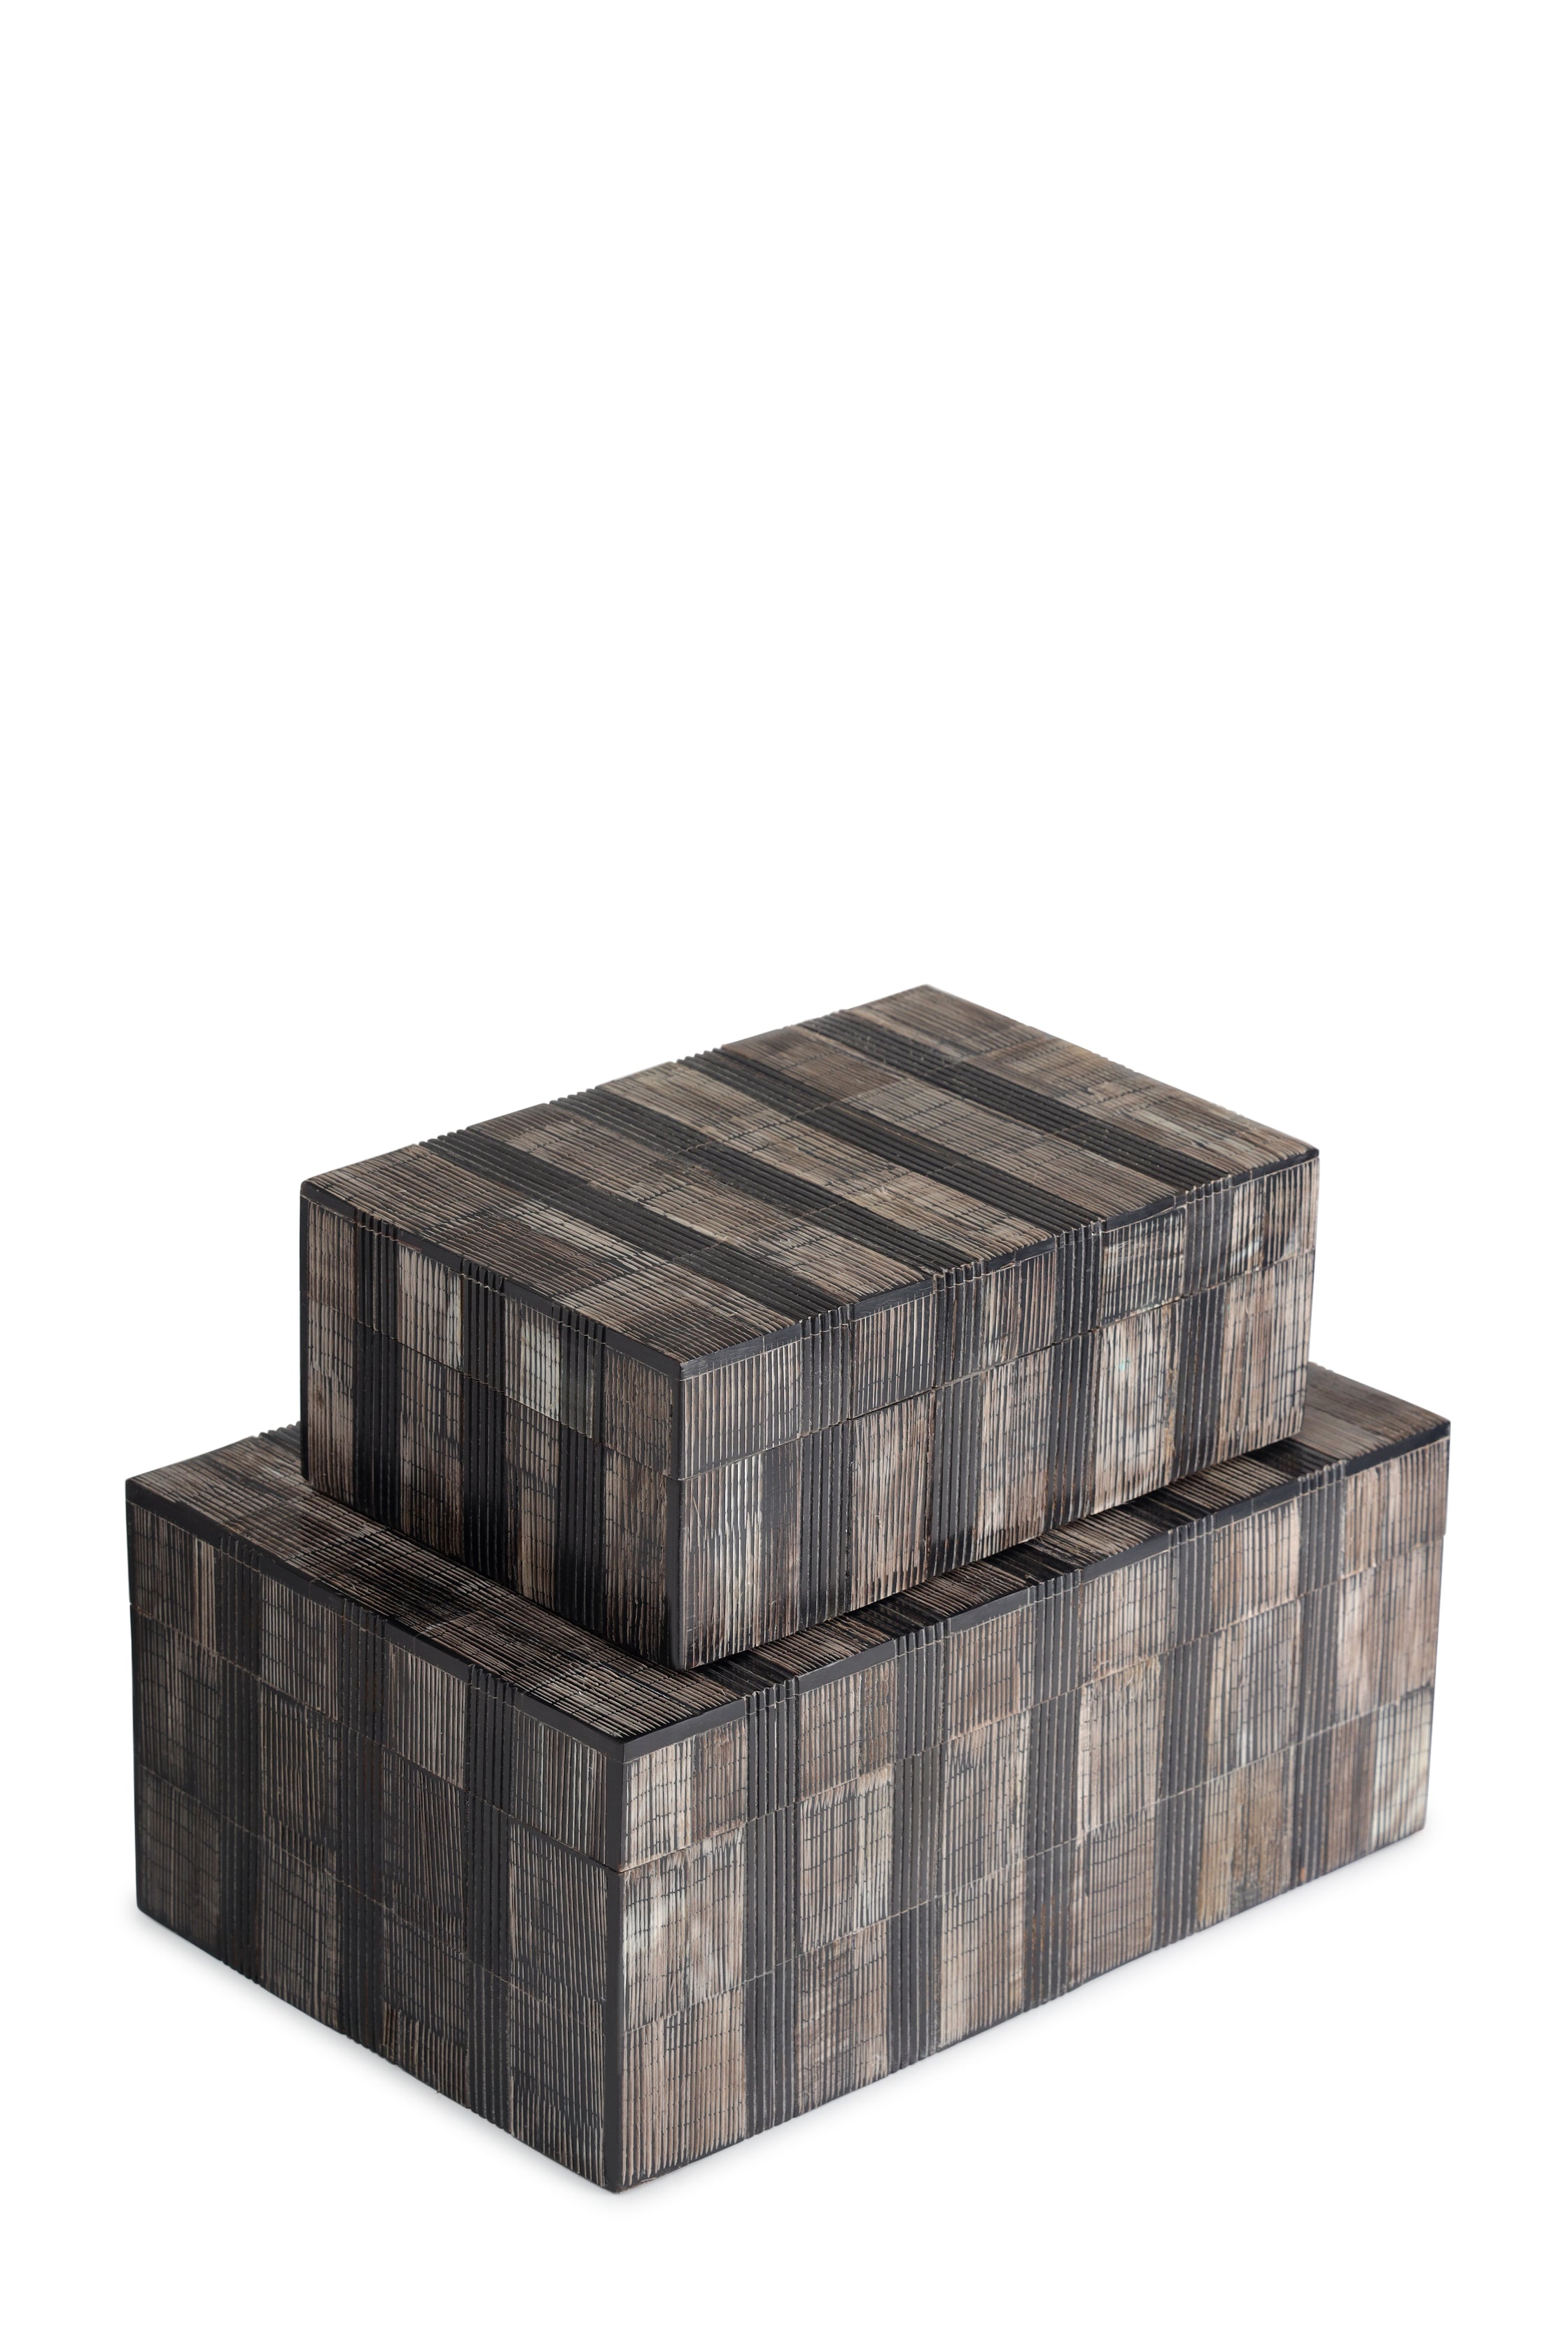 Decorative Vintage Wood Storage Trunk Box